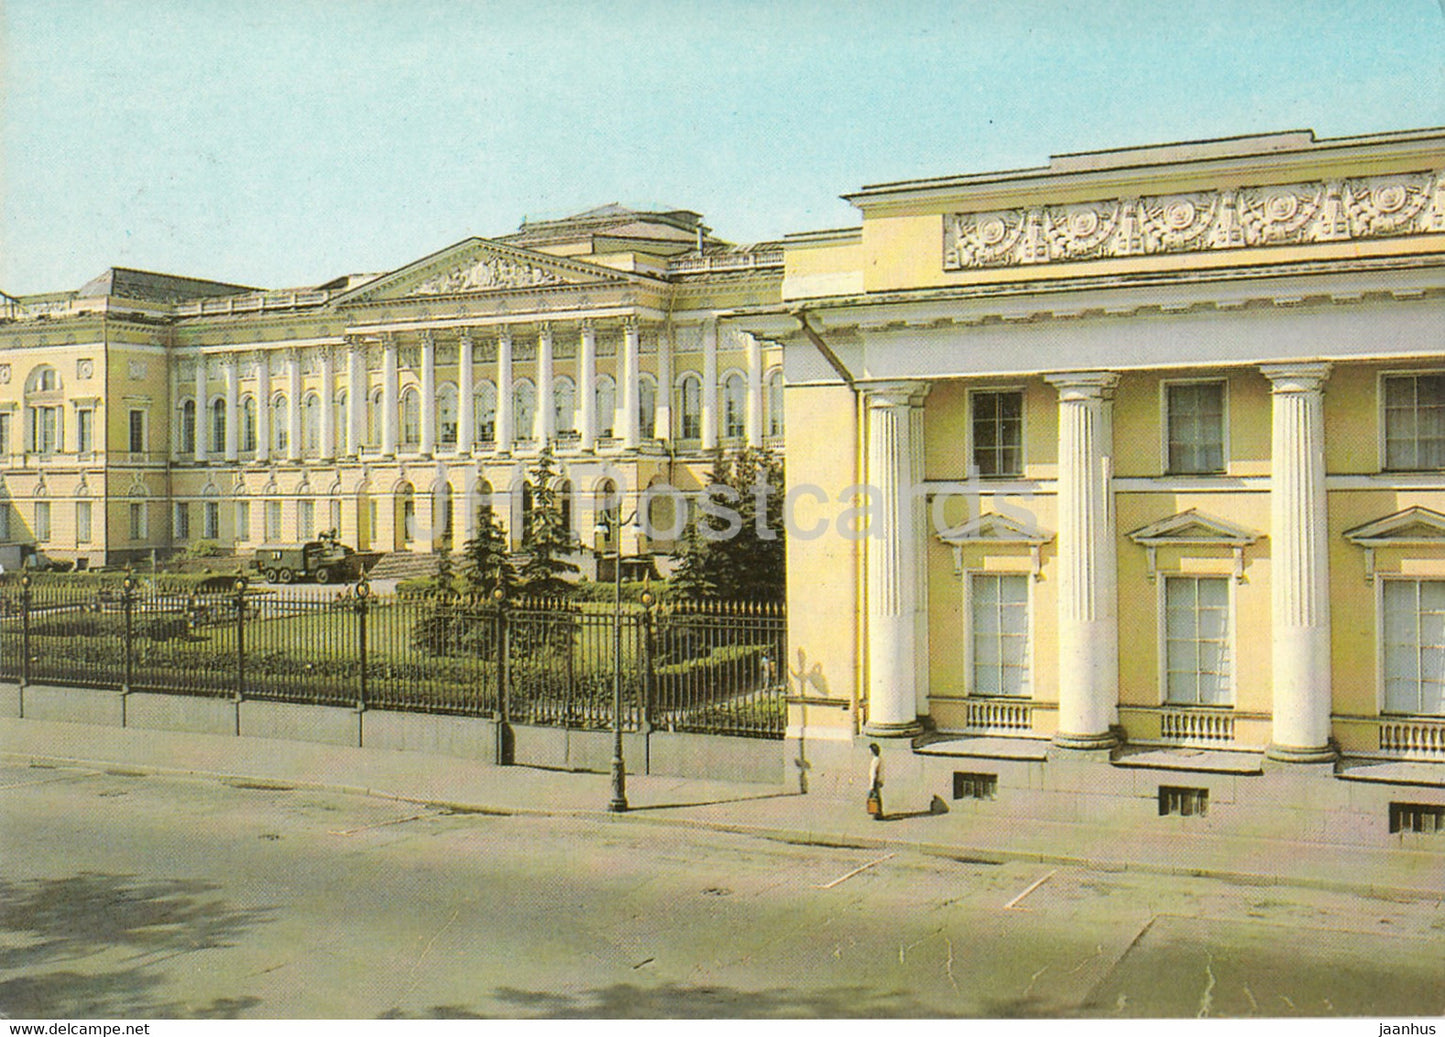 Leningrad - St Petersburg - Mikhailovsky Palace - Russian State Museum - postal stationery - 1985 - Russia USSR - unused - JH Postcards